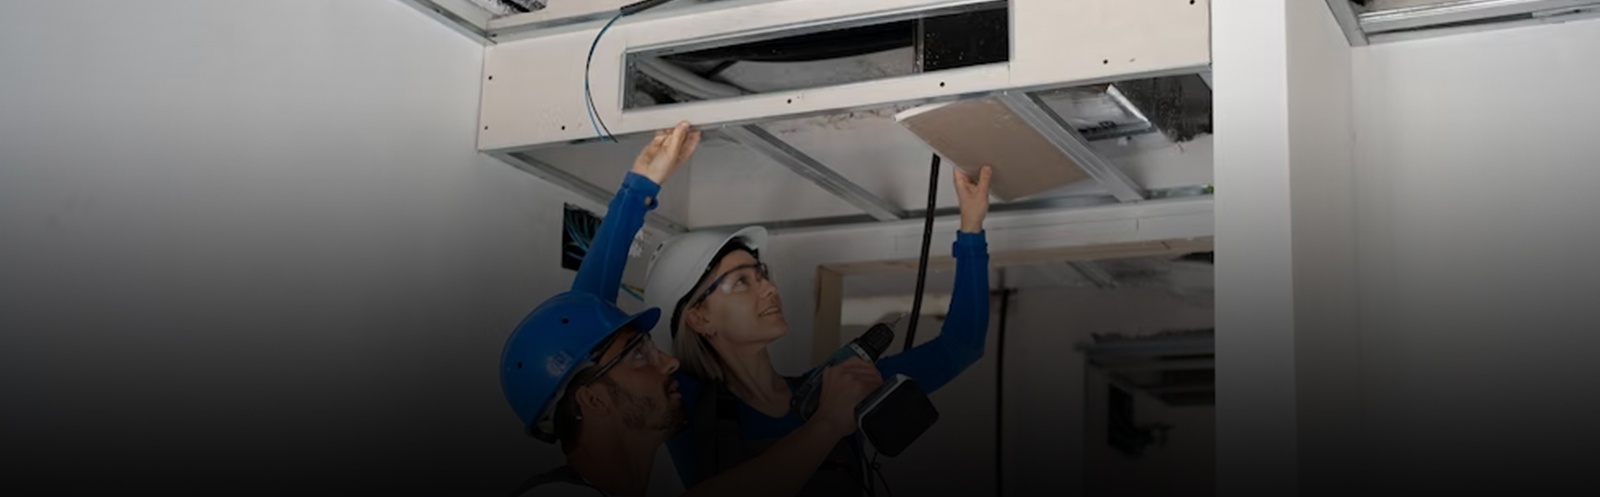 Innisfil Air Conditioner Installation, Repair & Maintenance Services